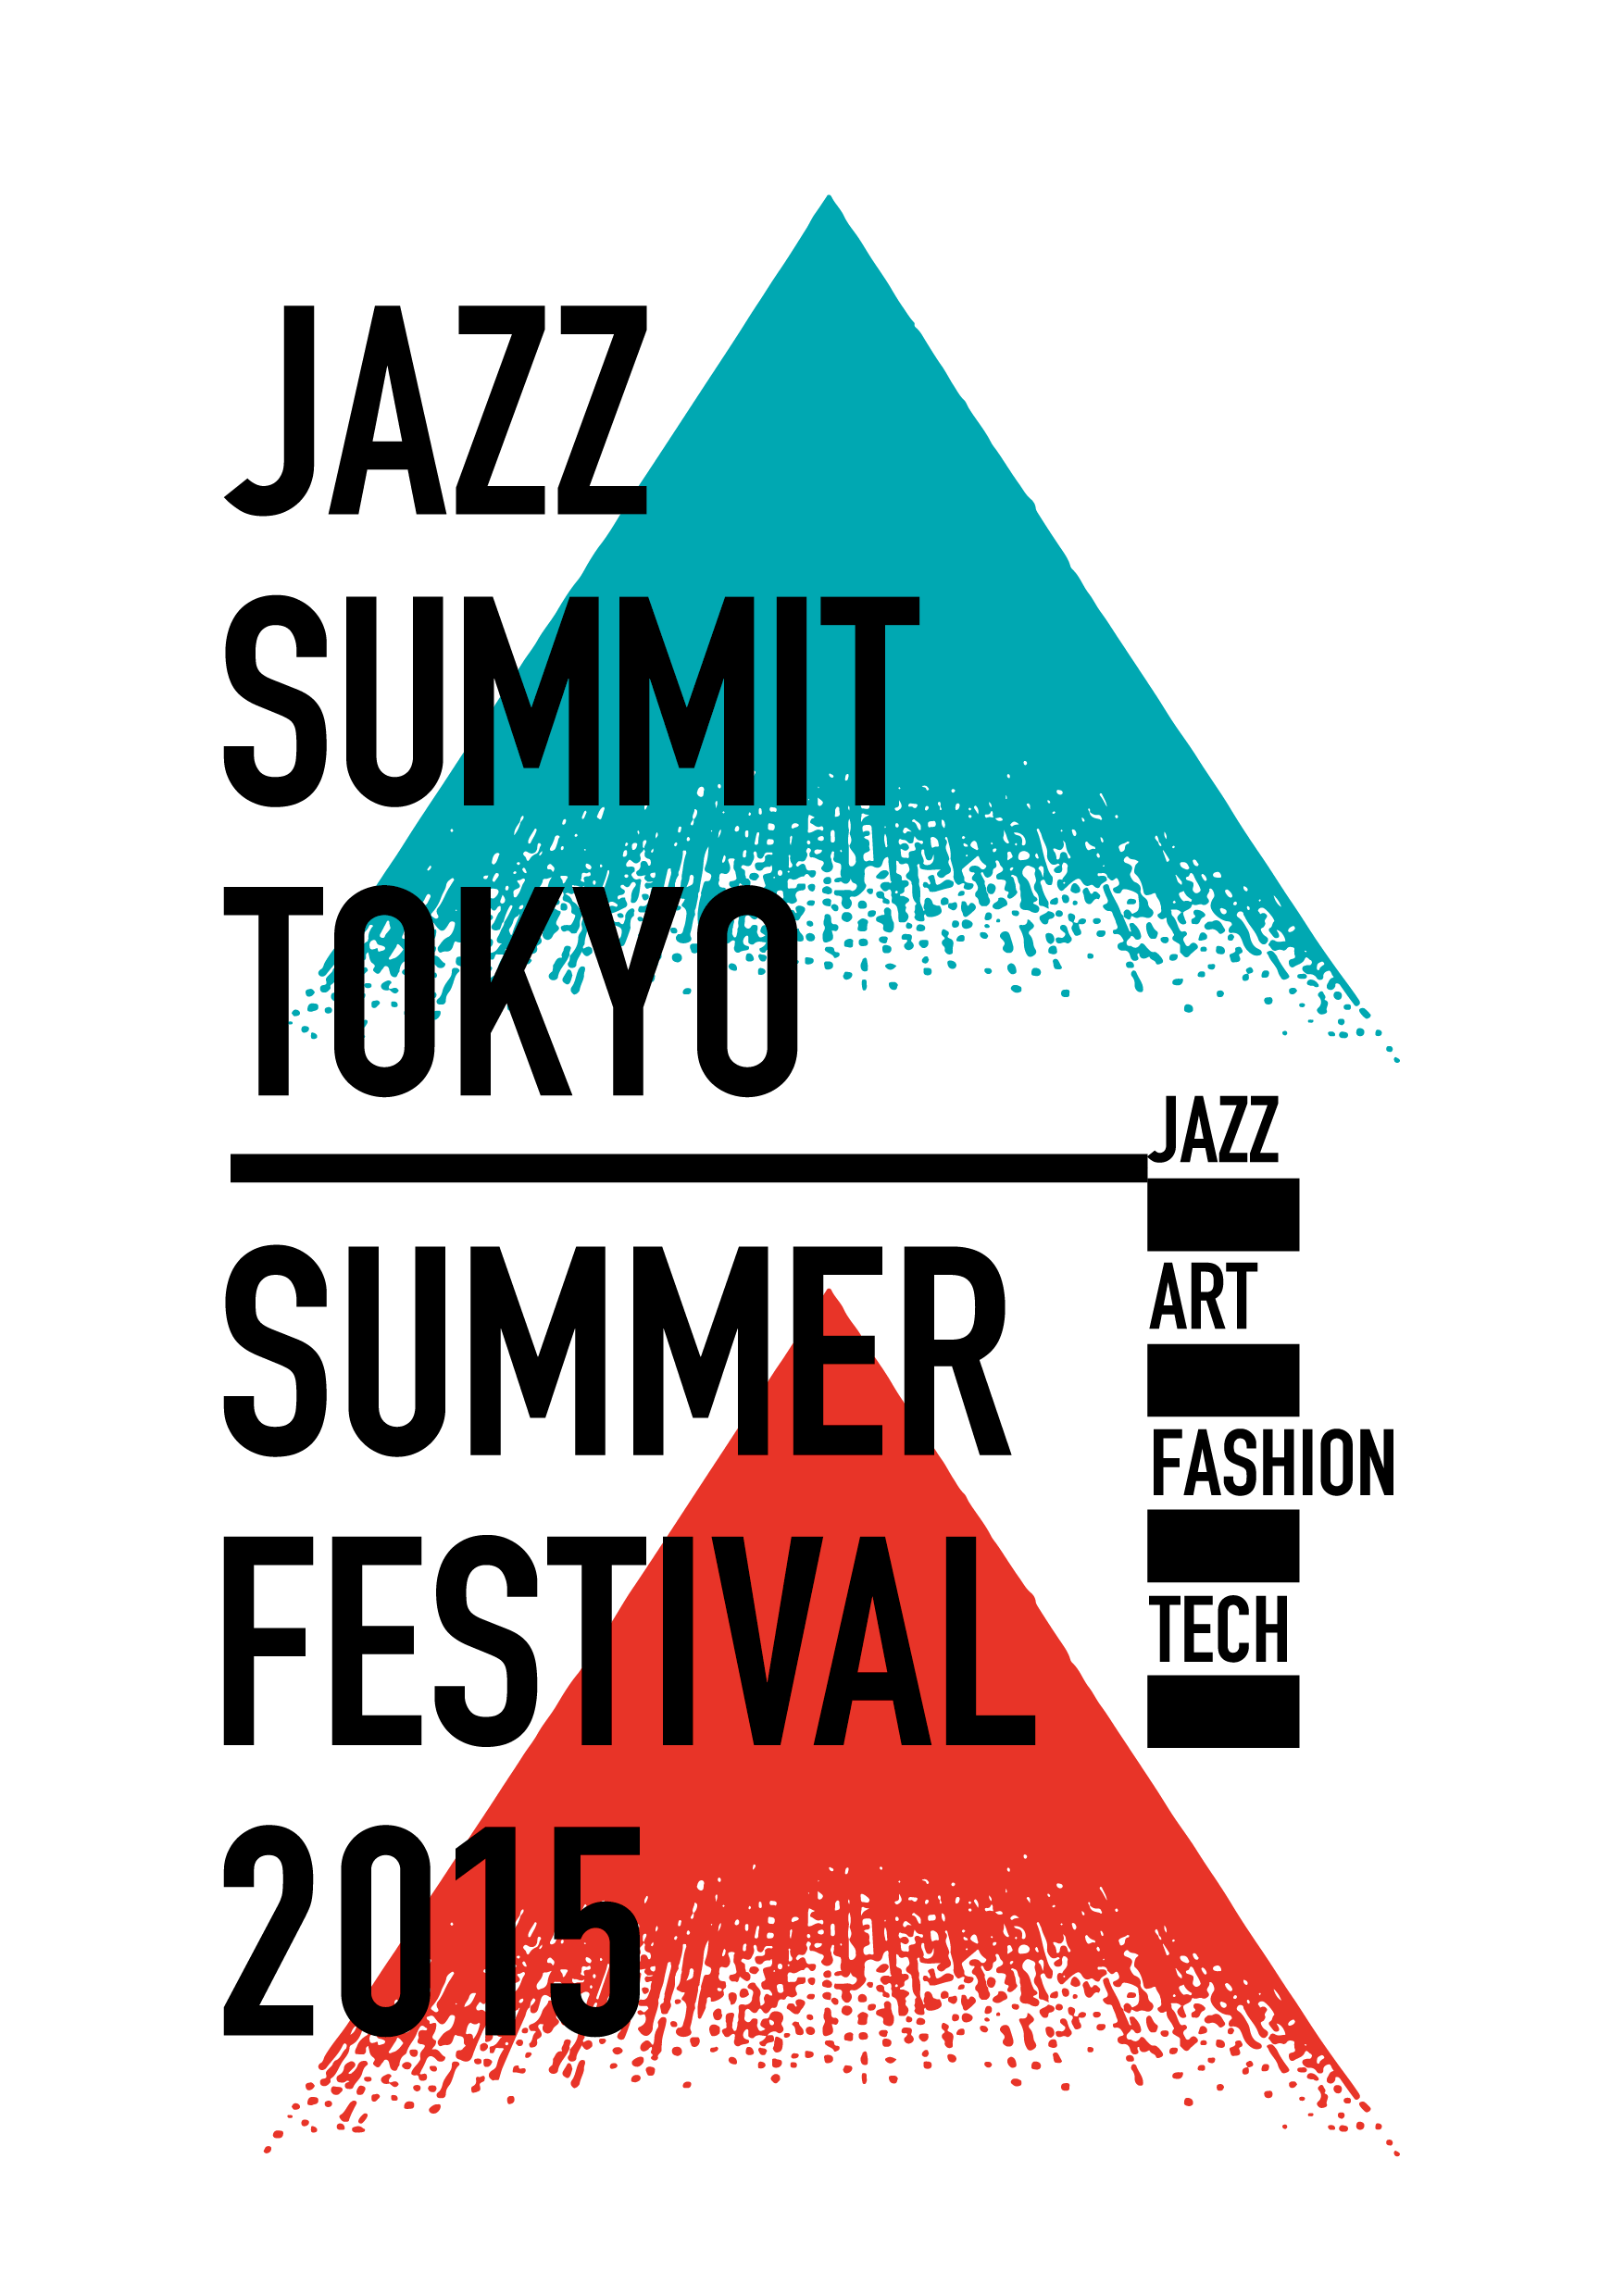 JAZZ SUMMIT TOKYO SUMMER FESTIVAL 2015